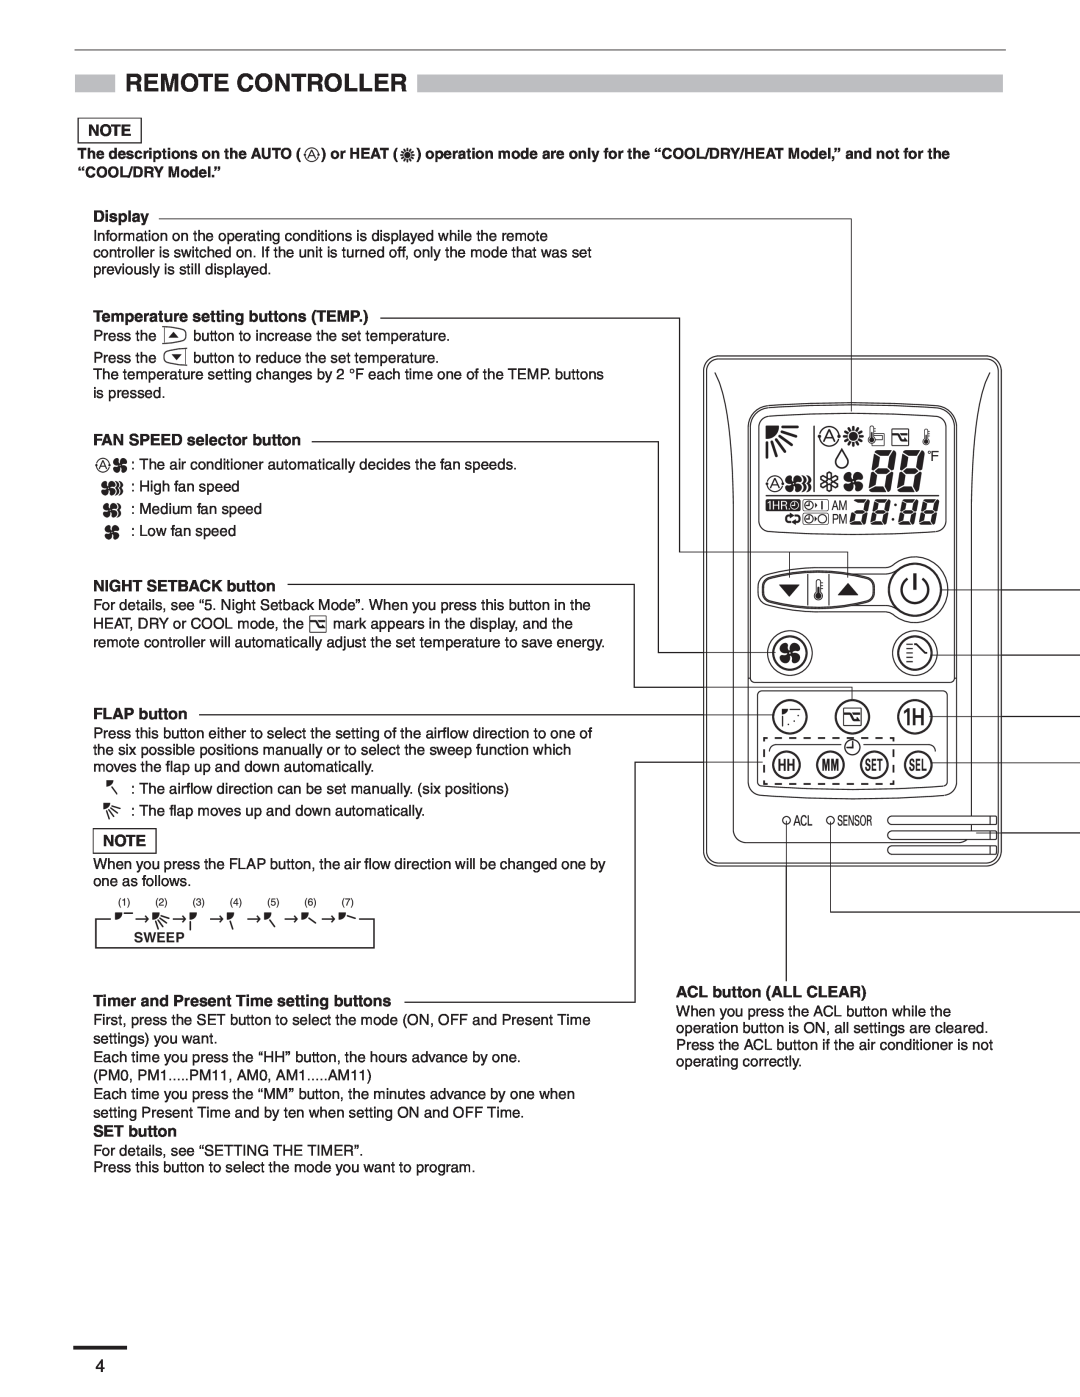 Panasonic CU-4KE24NBU Remote Controller, Display, Temperature setting buttons TEMP, FAN SPEED selector button, FLAP button 